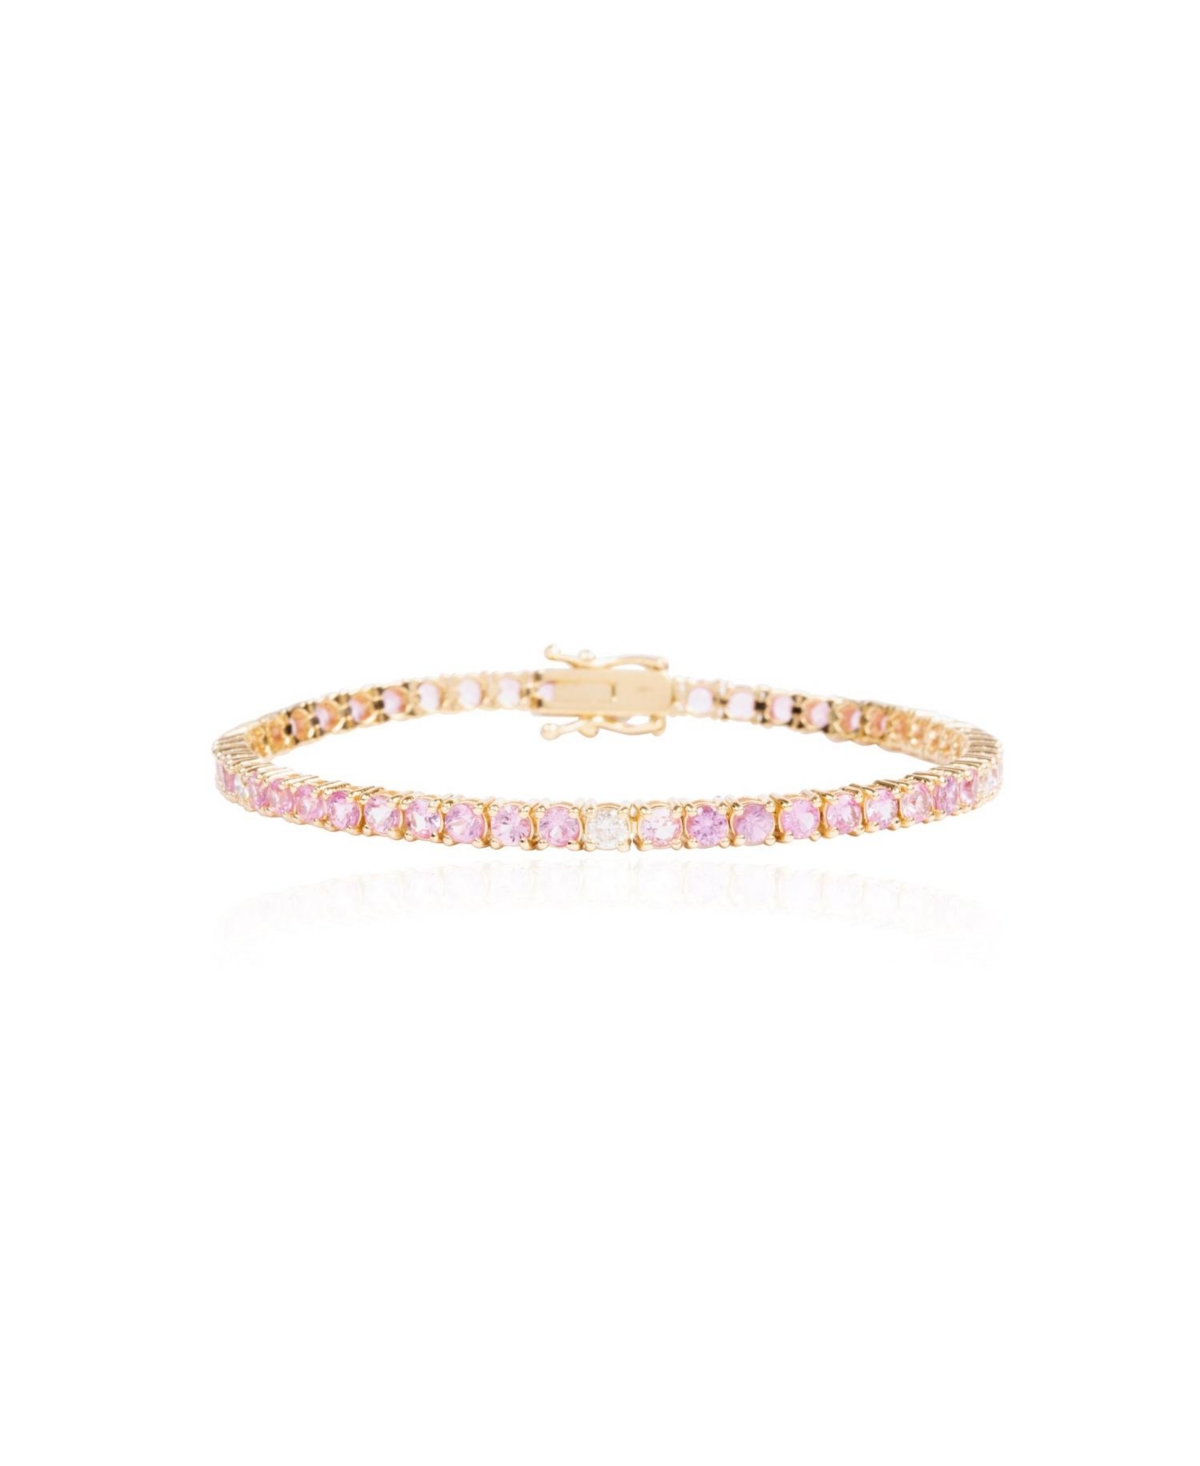 Large Pink Sapphire and Diamond Bracelet - Pink